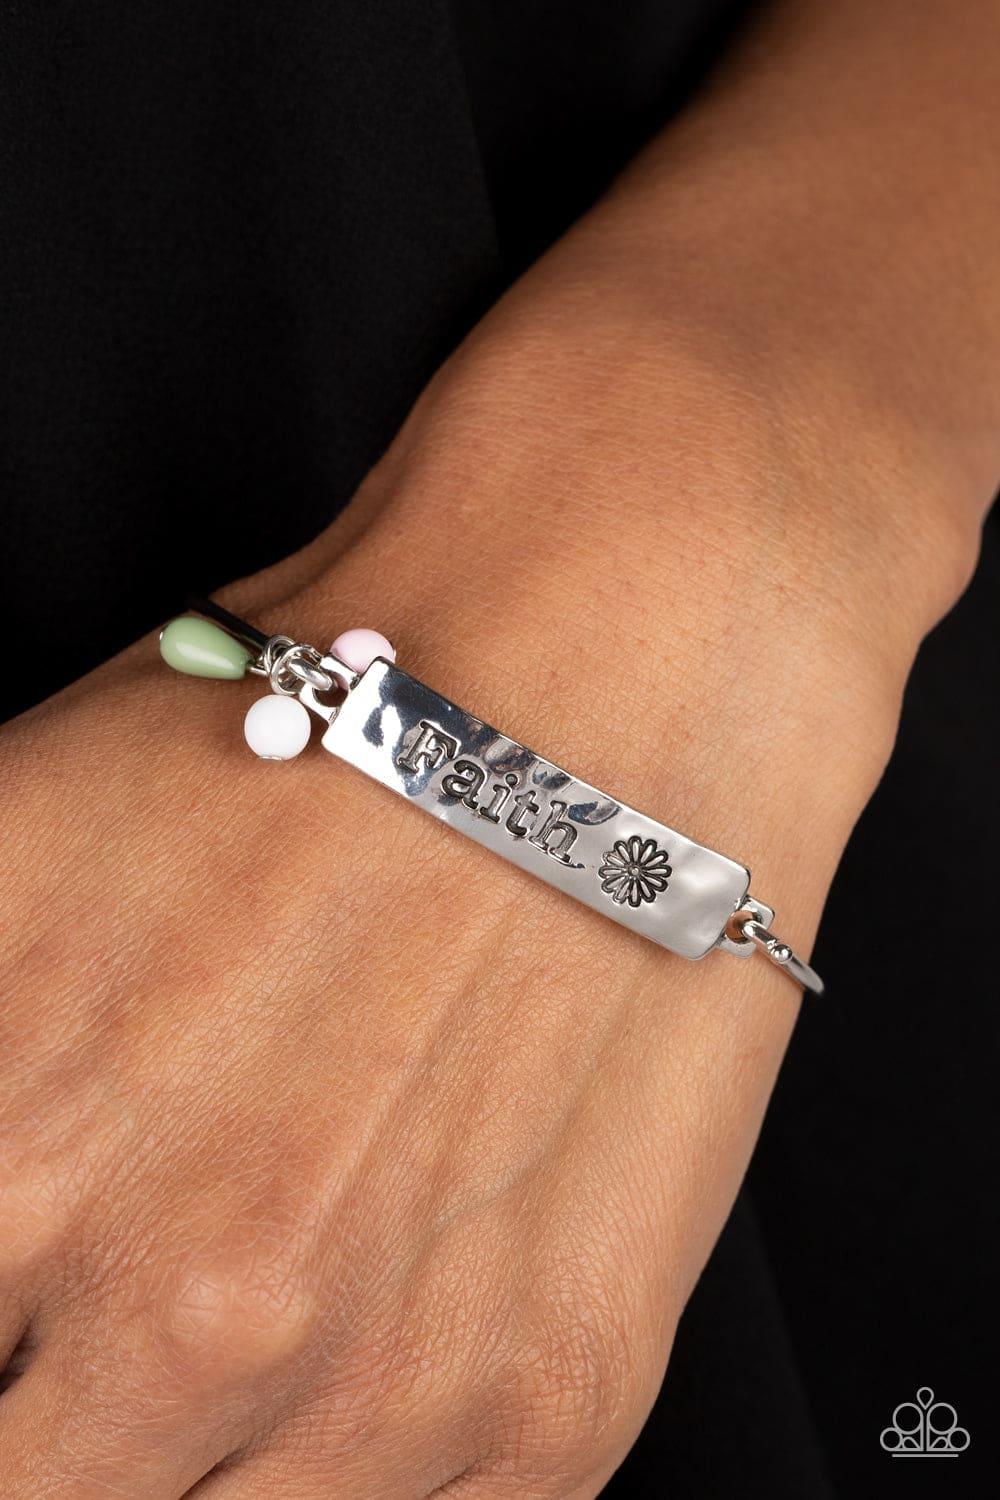 Paparazzi Accessories - Flirting With Faith - Green Bracelet - Bling by JessieK